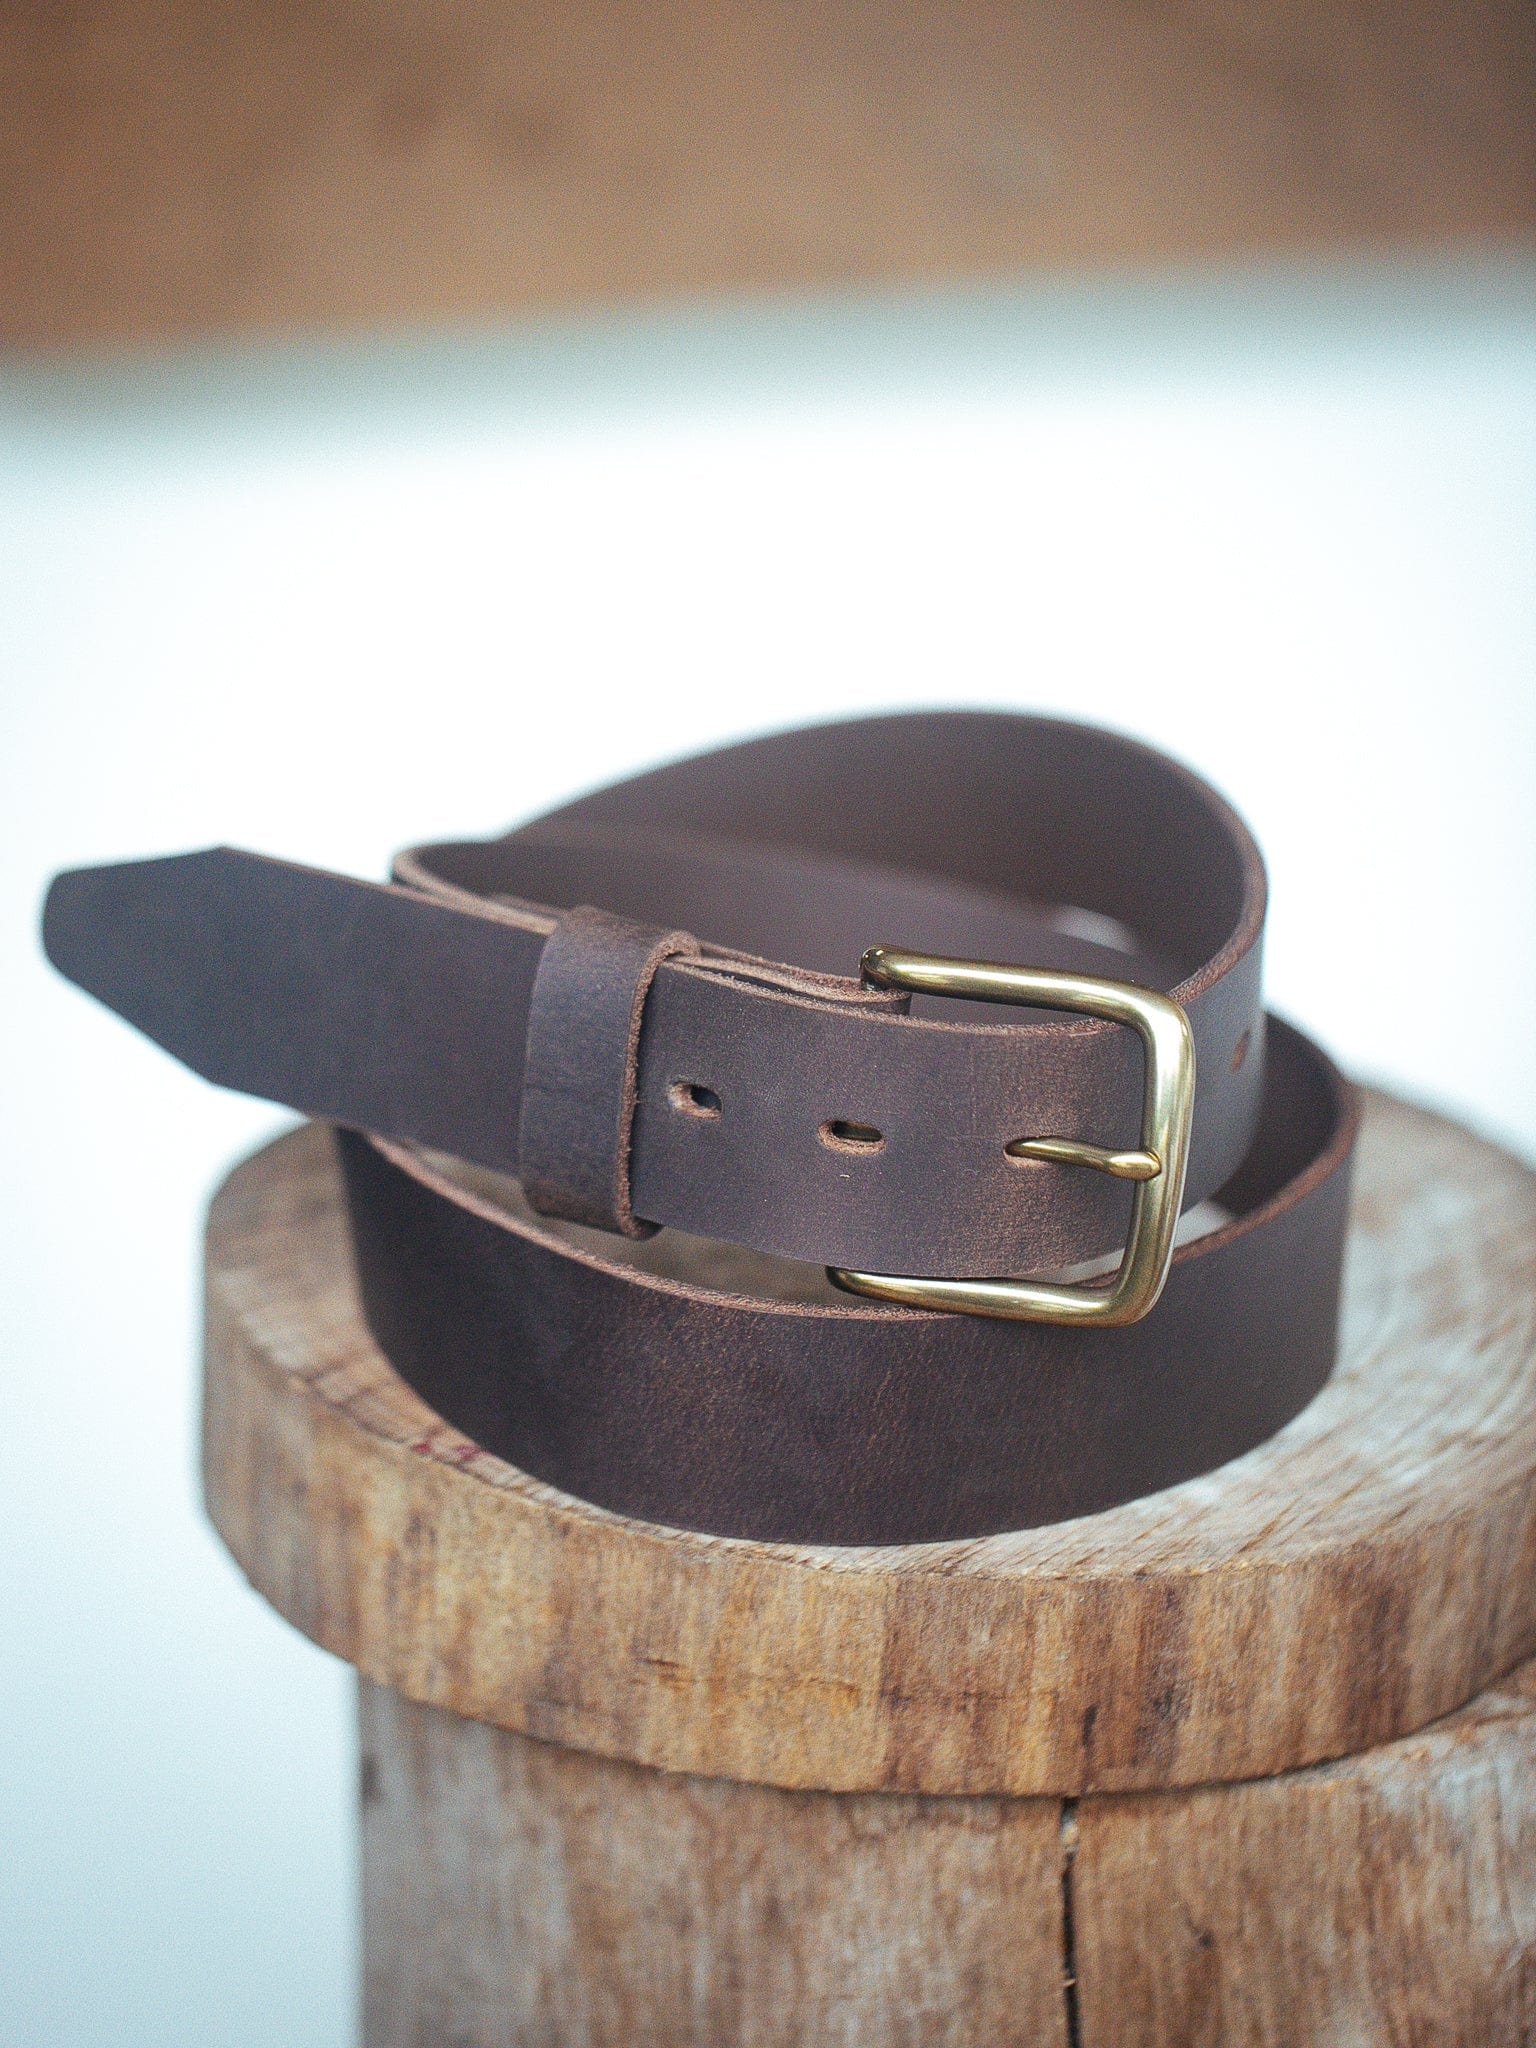 The Real McCaul Leathergoods Belts Standard 38mm Belt - Vintage Brown Australian Made Australian Owned Solid Leather Men's Belt - Handmade in Australia - Brass Buckle